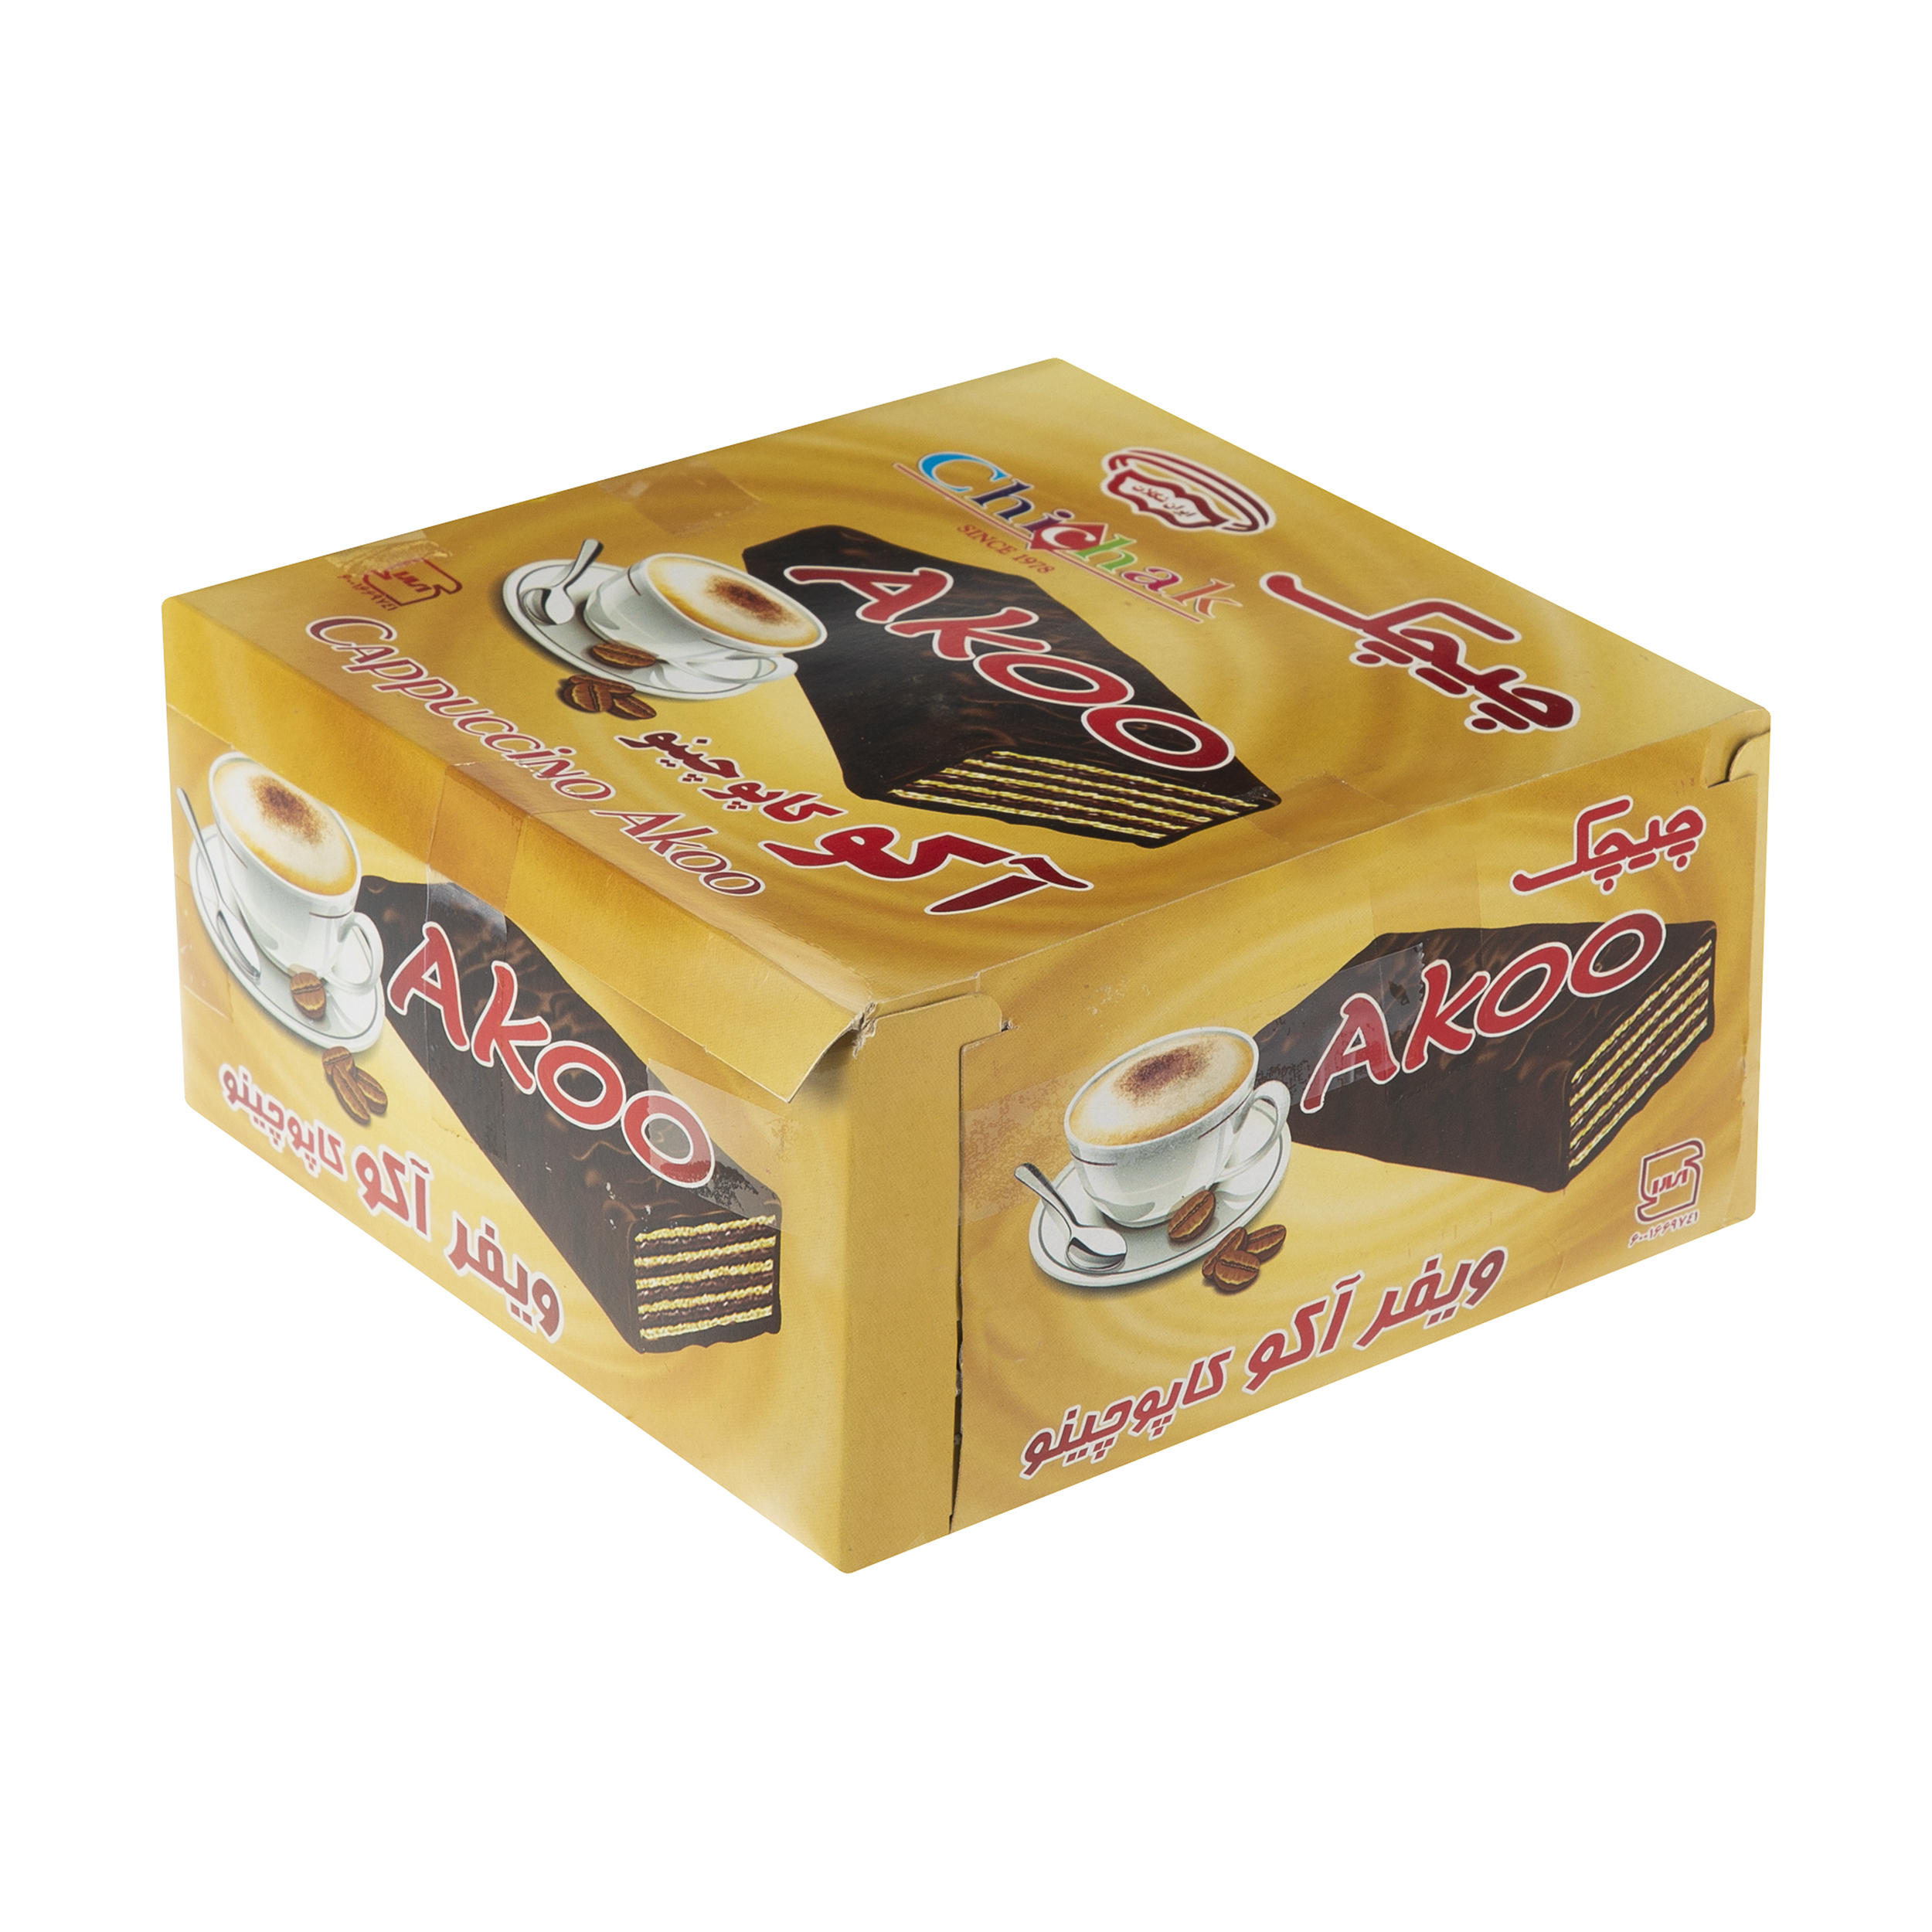 ویفر آکو چیچک با طعم کاپوچینو - 30 گرم بسته 24 عددی